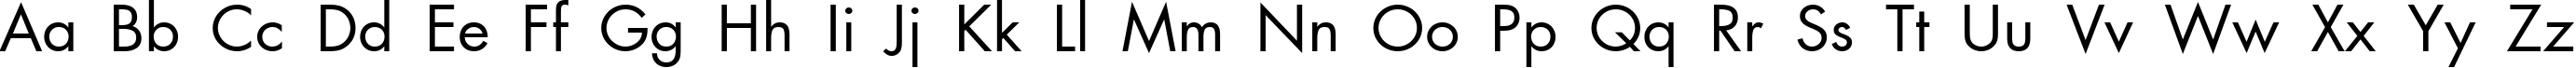 Пример написания английского алфавита шрифтом AG_Futura